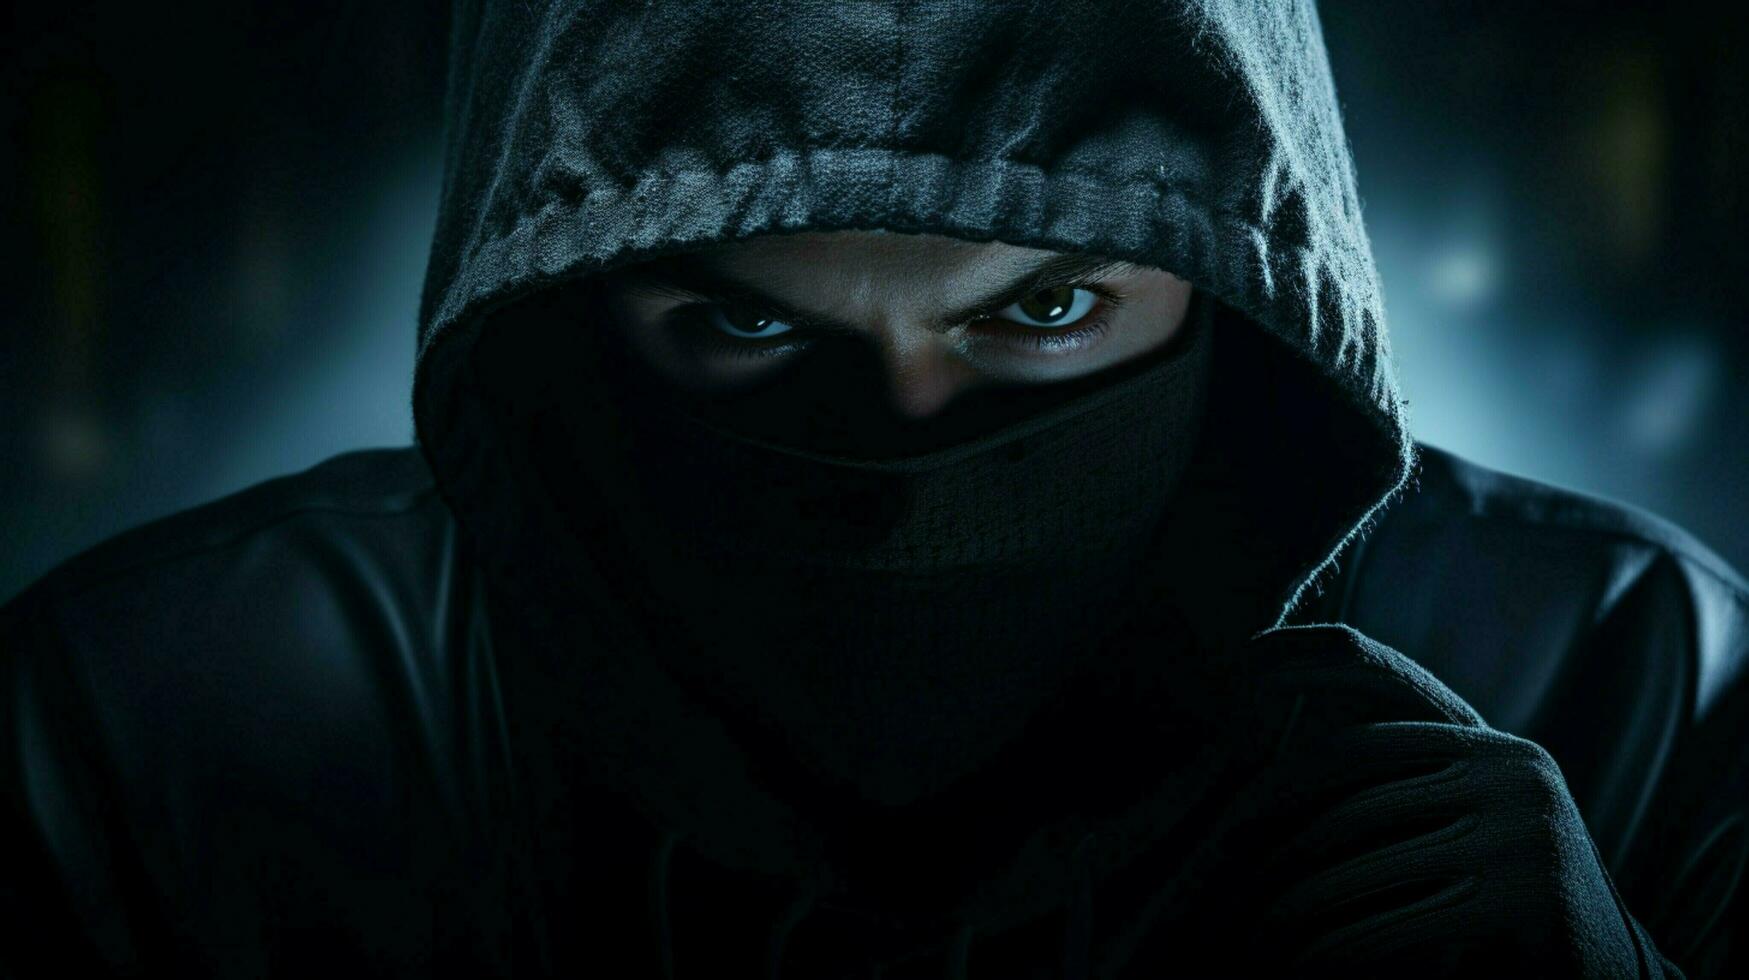 hooded thief lurking in the dark night photo